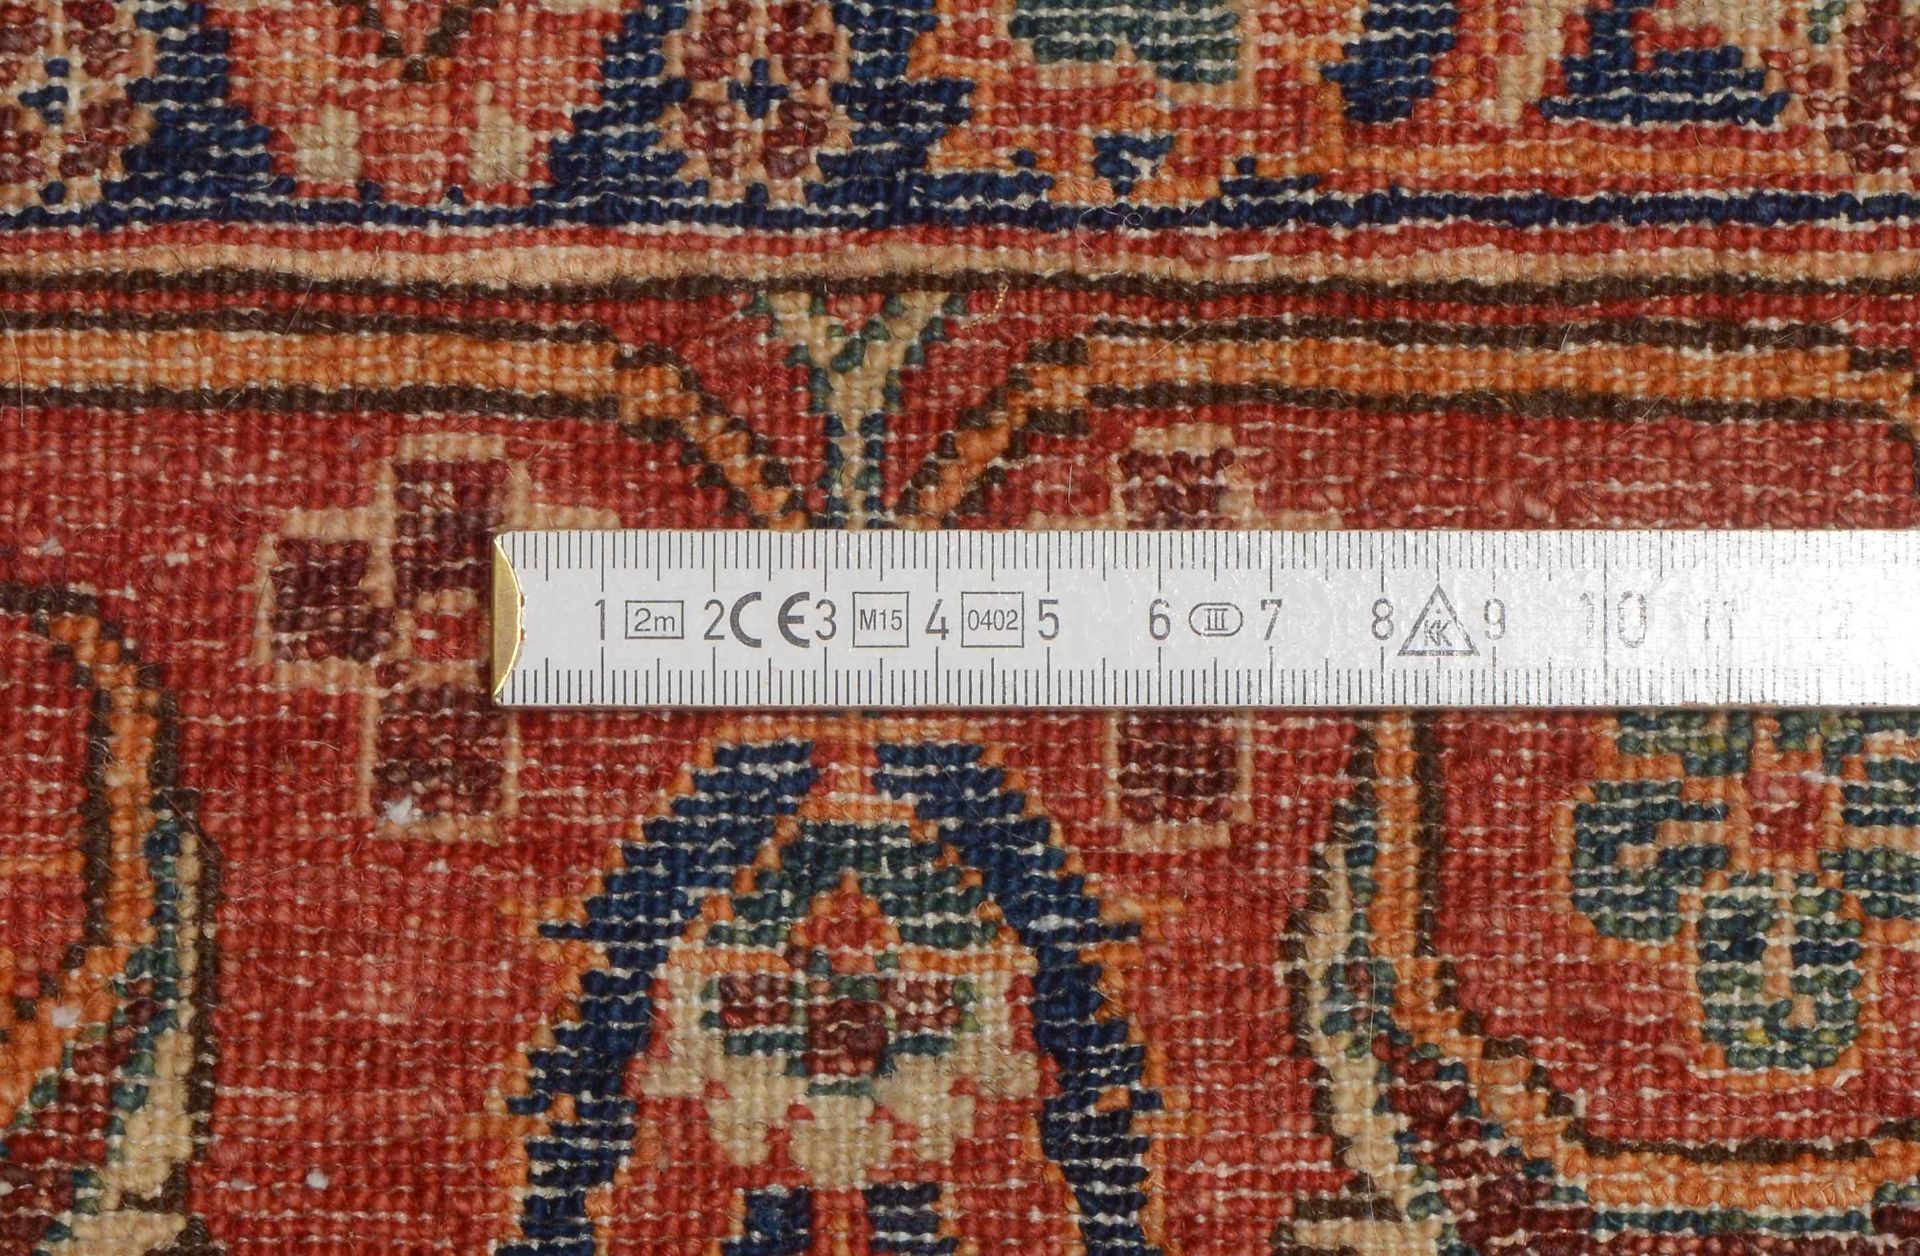 Orientteppich (Pakistan), ringsum komplett, Flor in gutem Zustand; Maße 313 x 202 cm - Bild 2 aus 2